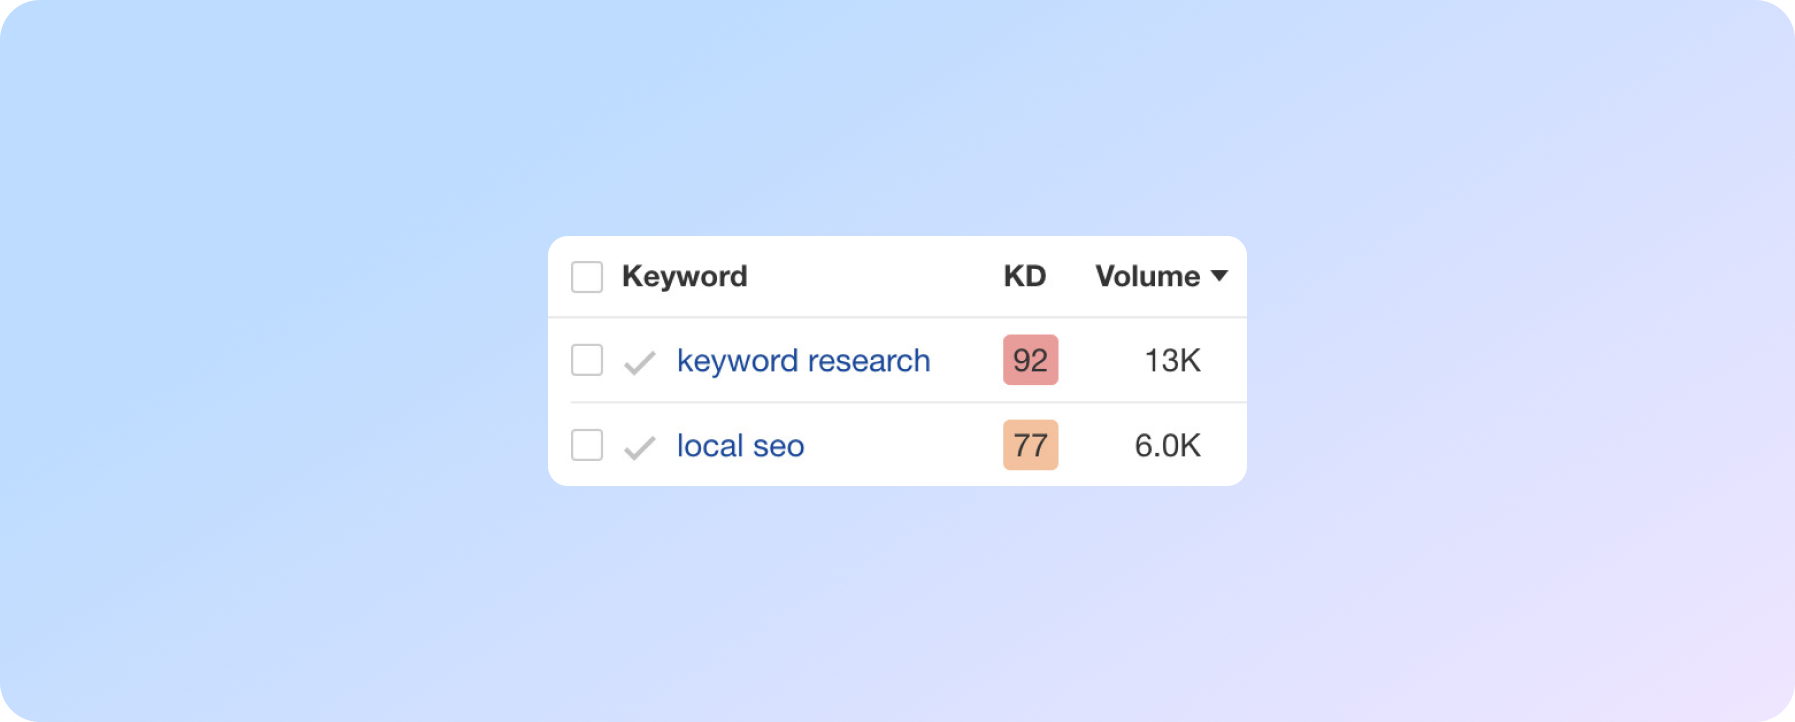 keyword search volumes